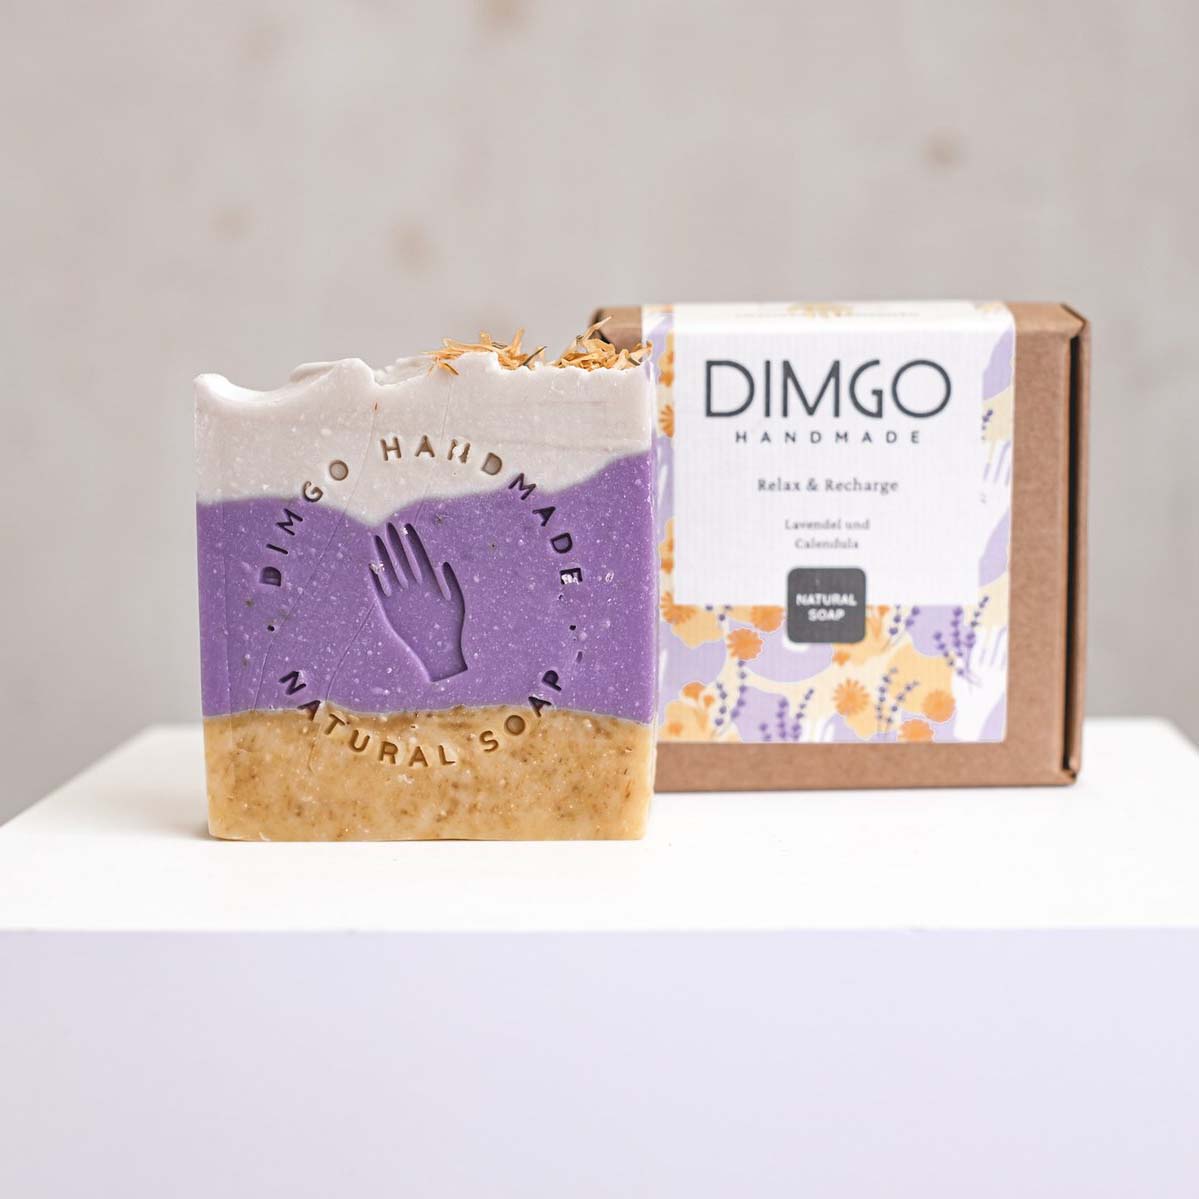 Dimgo Handmade Vegange Naturseife Relax & Recharge Lavendel Calendula nordery